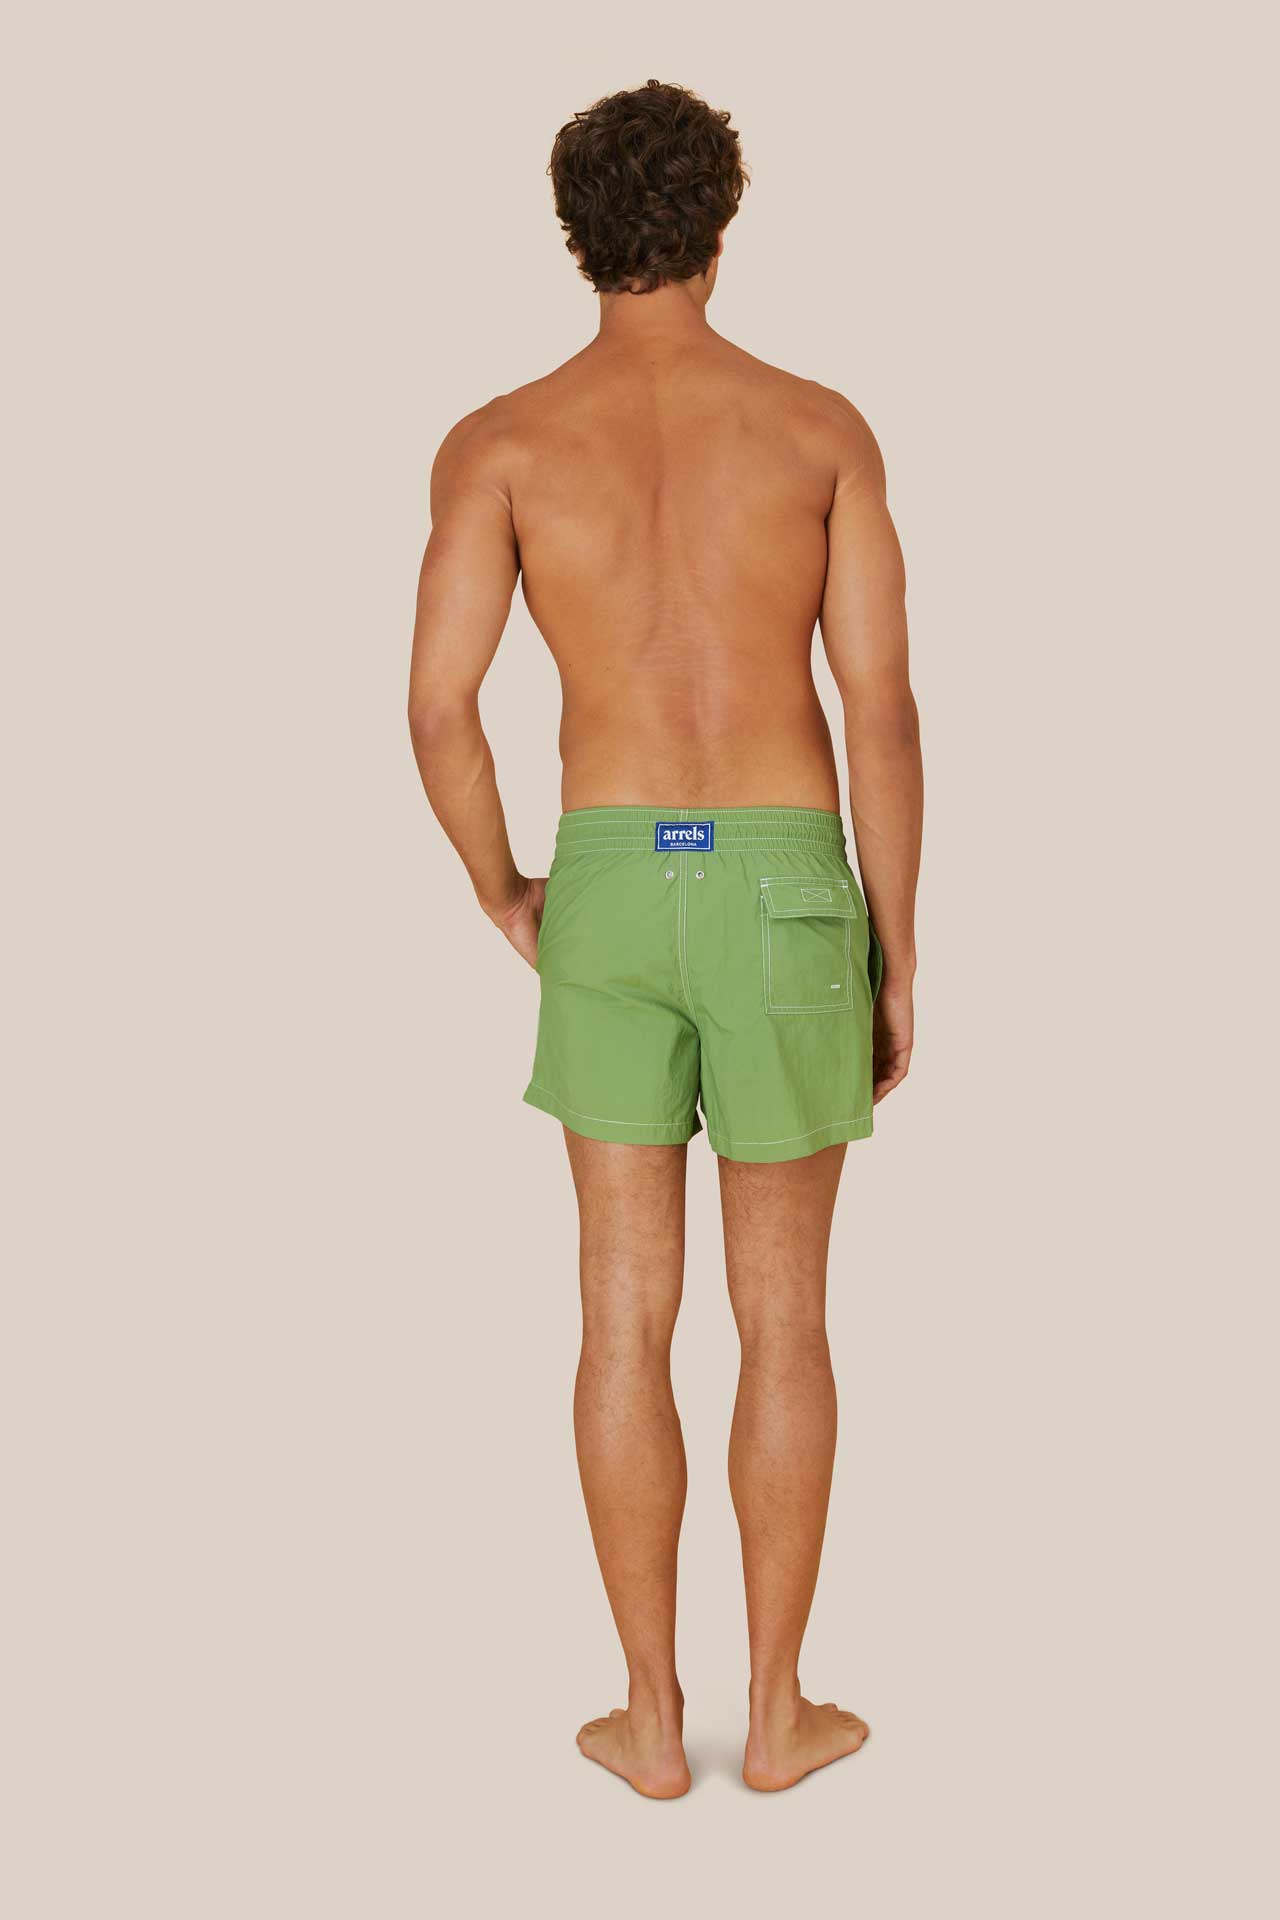 Swim Shorts Green -  swim-shorts-khaki -Arrels Barcelona